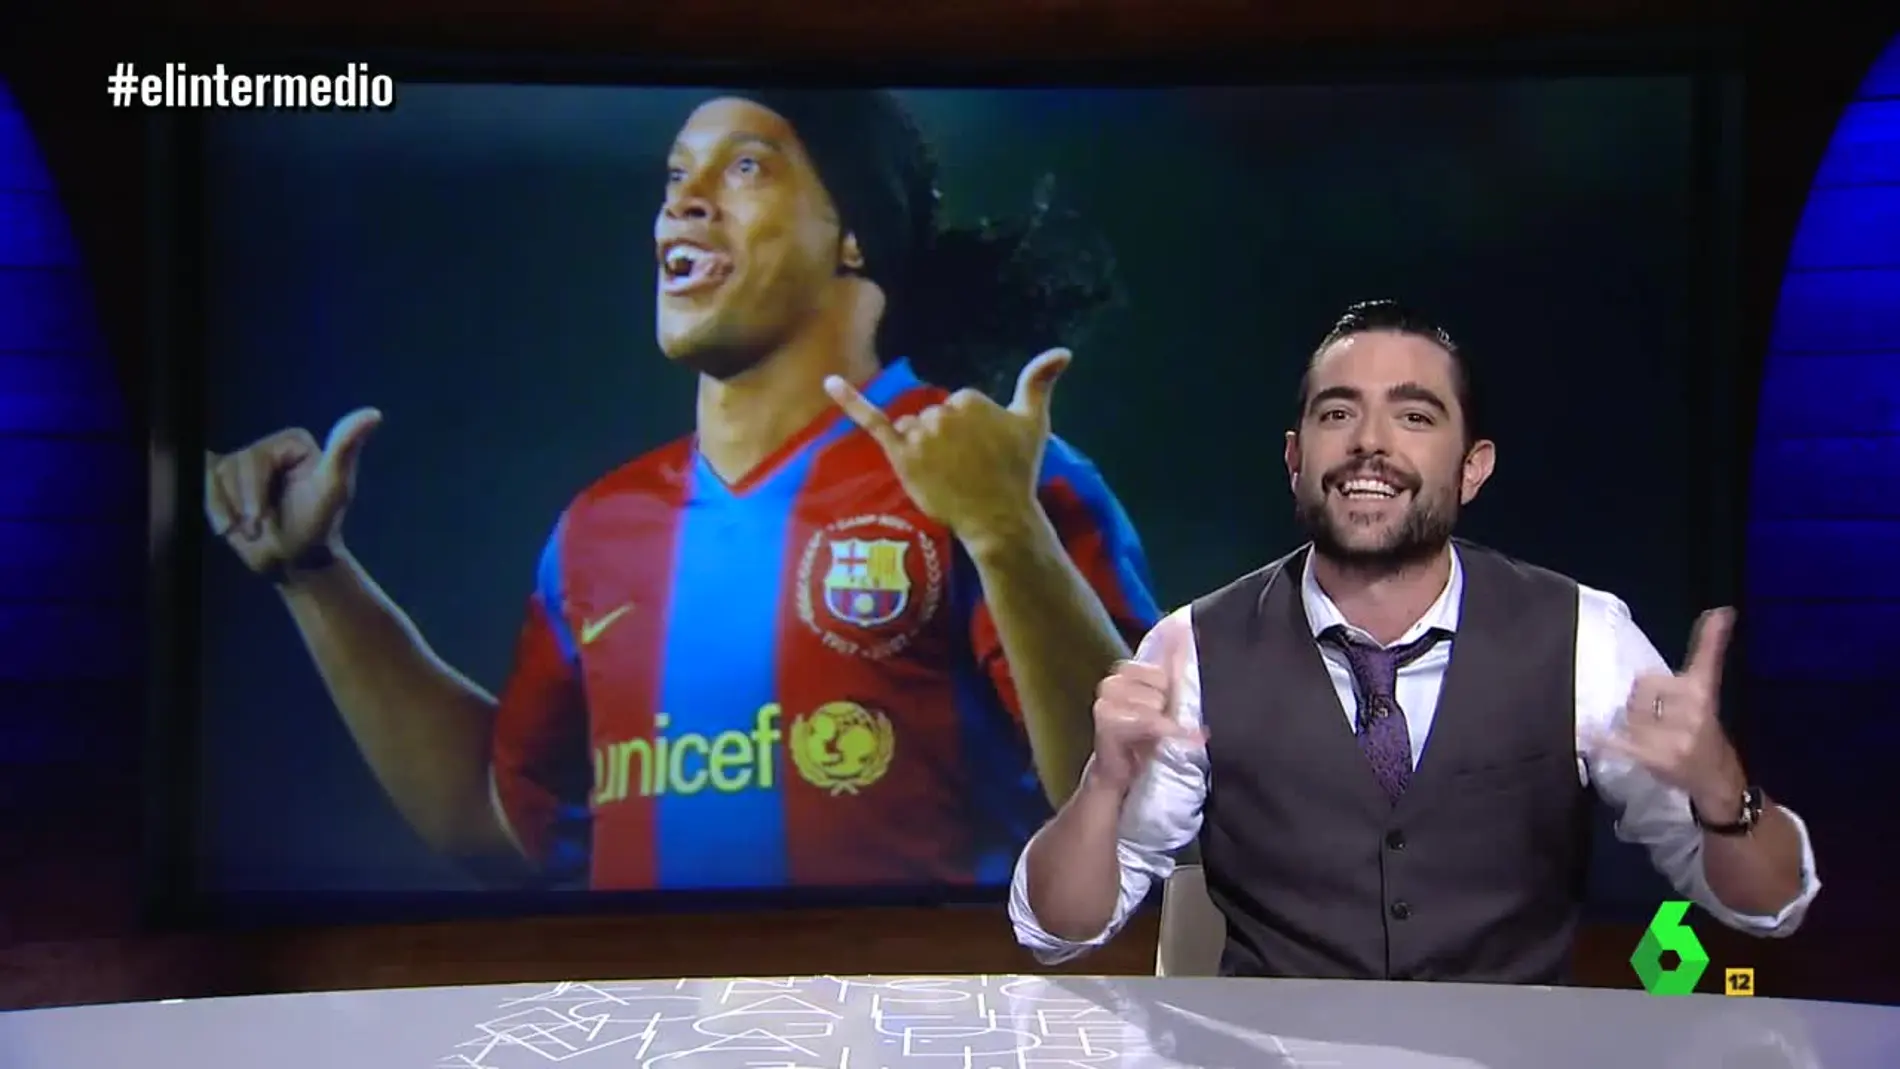 El gesto de Ronaldinho, el símbolo de consenso entre Errejón e Iglesias